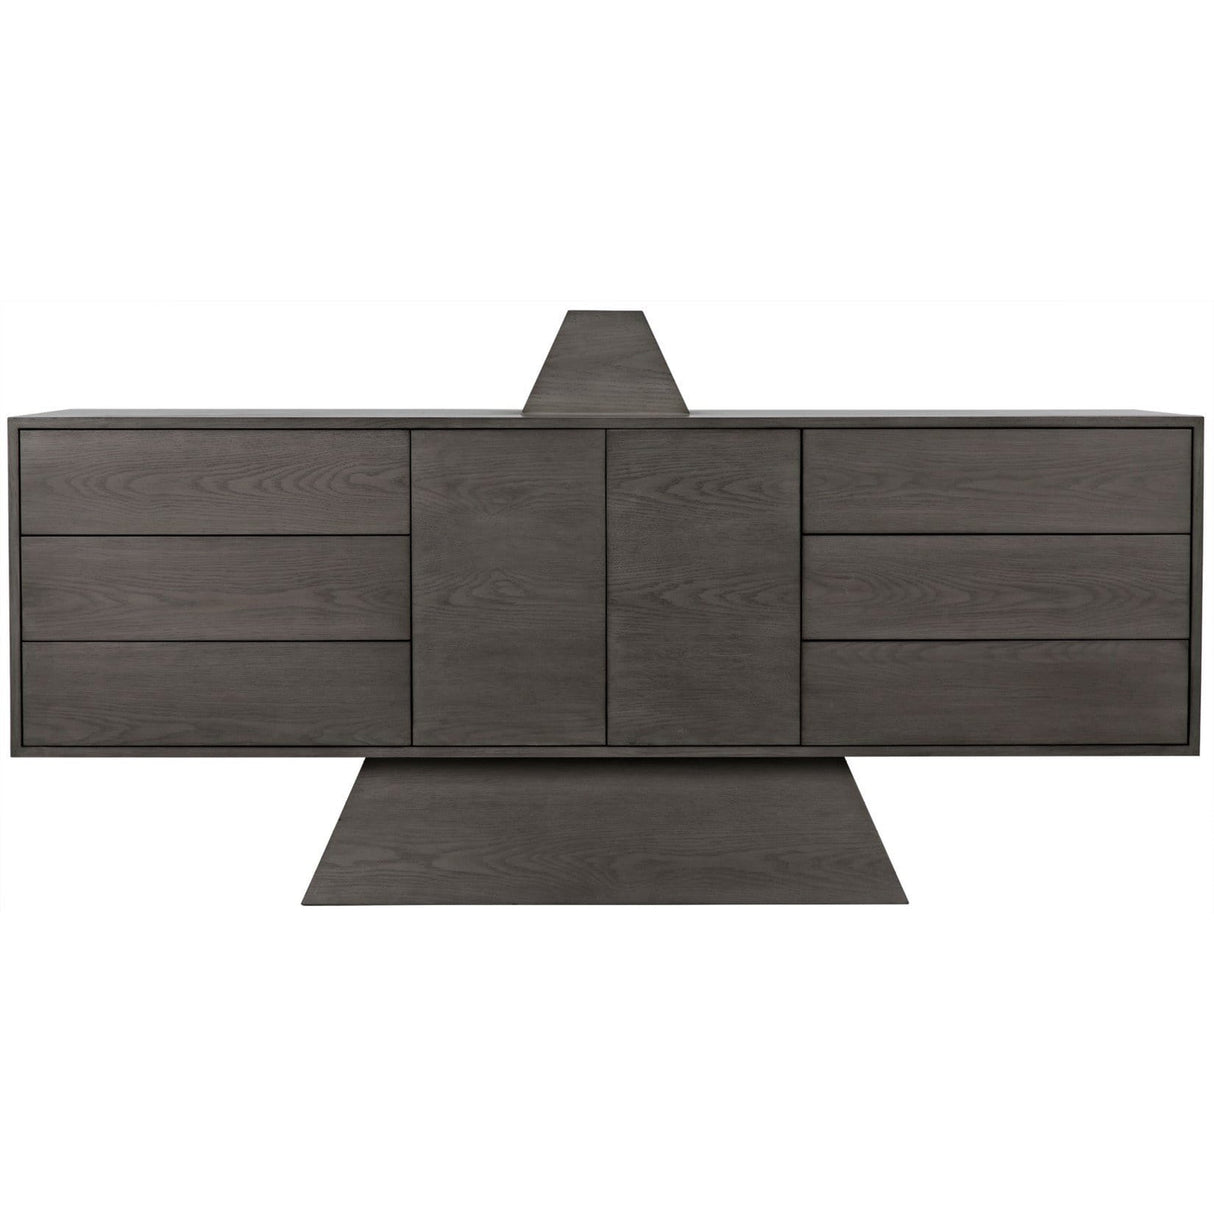 CFC Pyramid Cabinet Furniture cfc-FF208